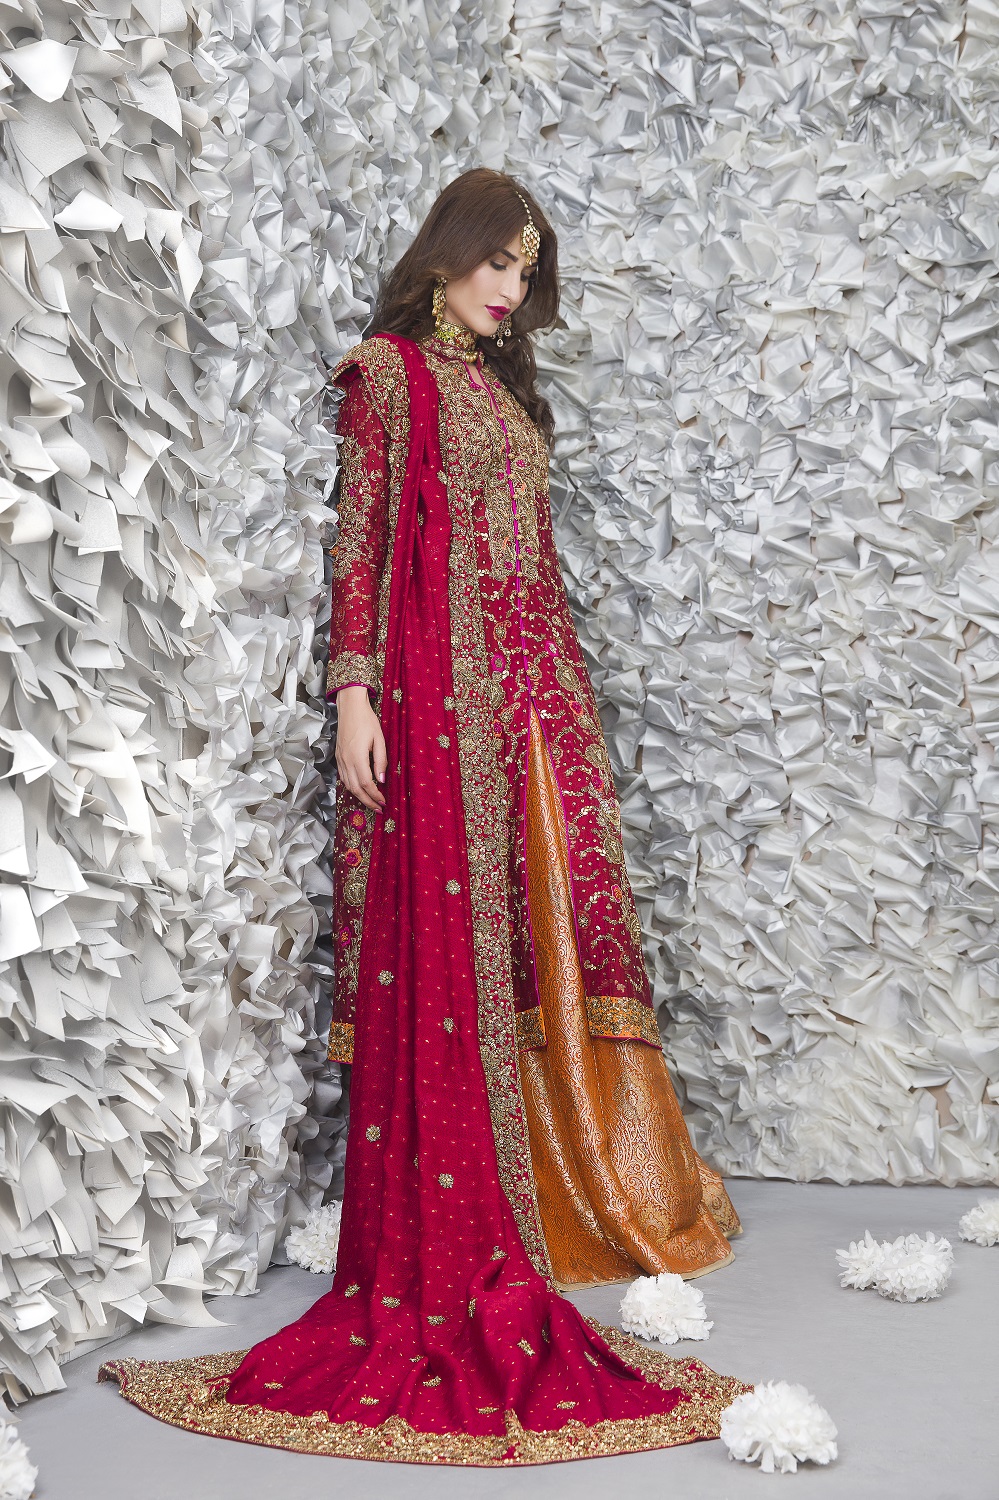 Gorgeous Pakistani Model Abeer Rizvi Looks Gorgeous In Her Latest Photo shoot